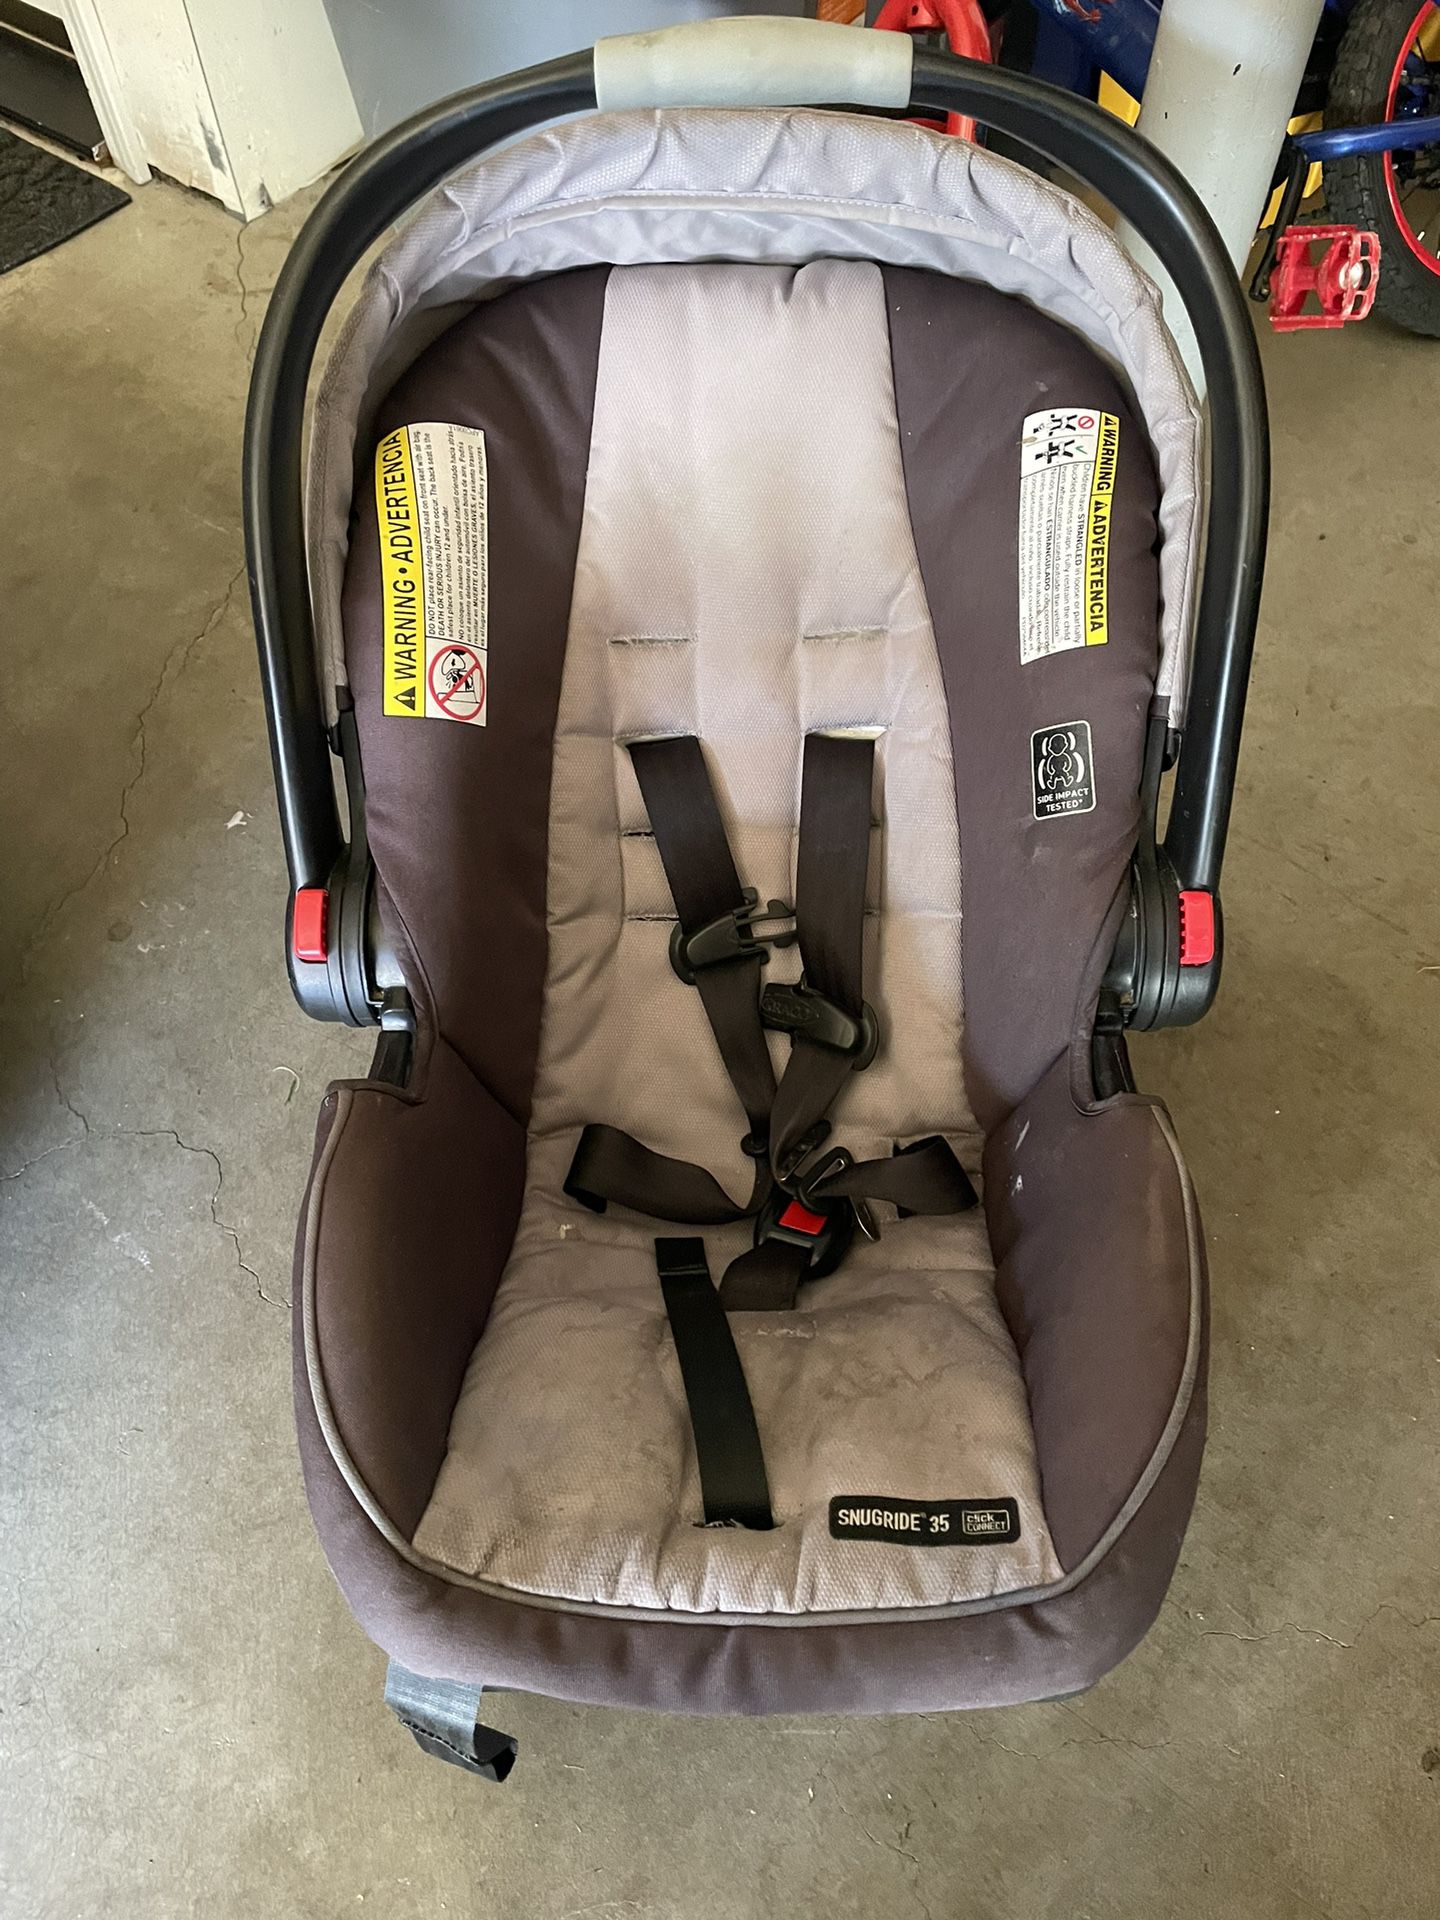 Free Infant Car Seat 